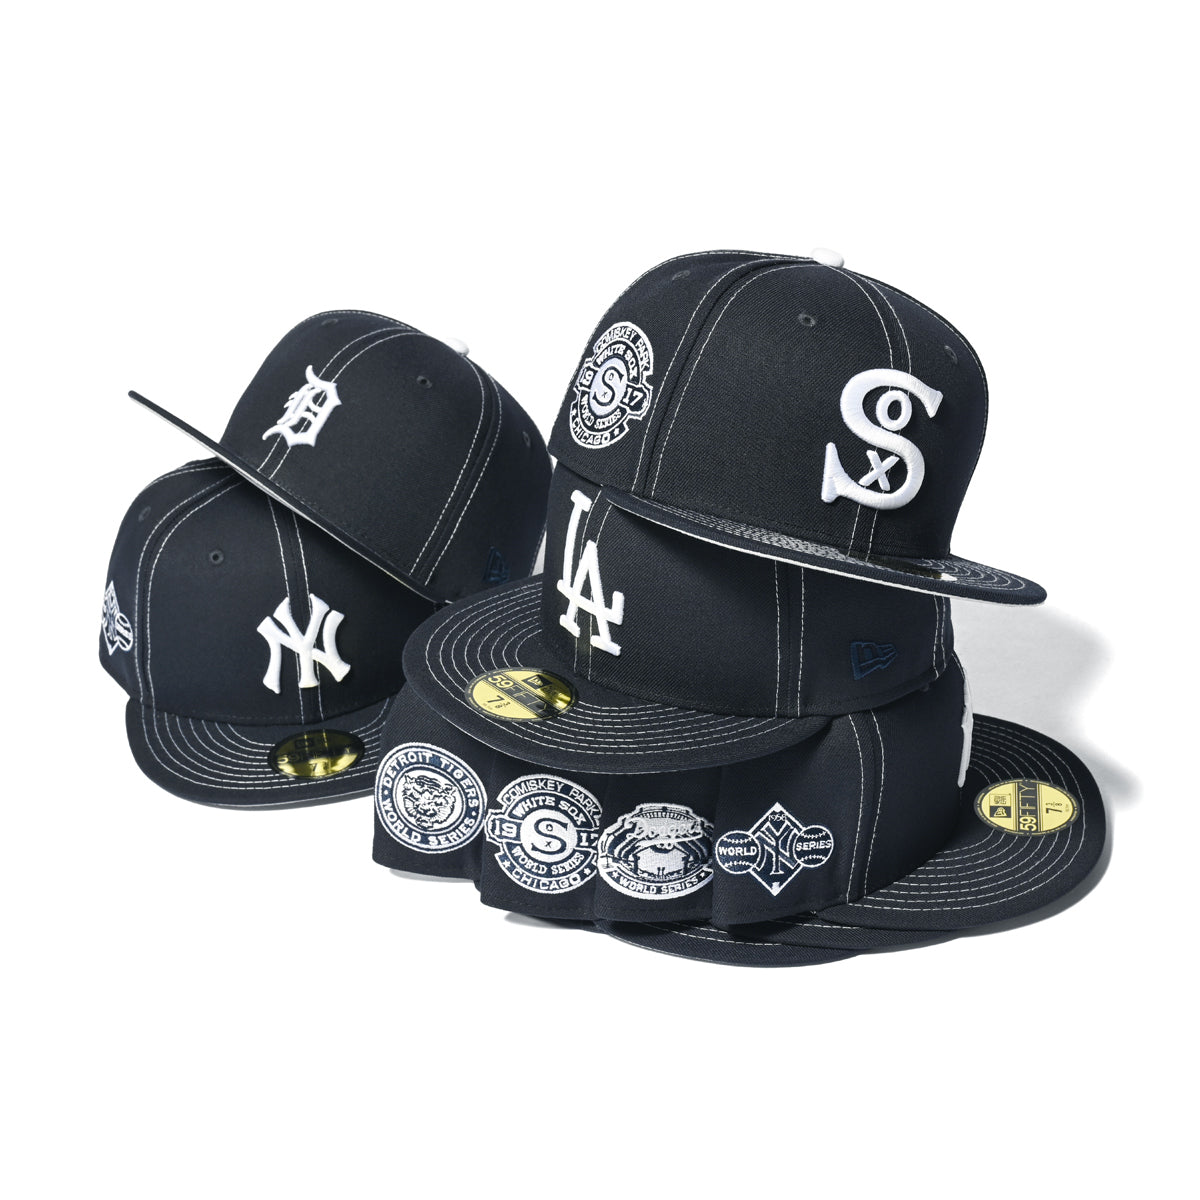 NEW ERA New York Yankees - WS 1958 59FIFTY NAVY【70756786】